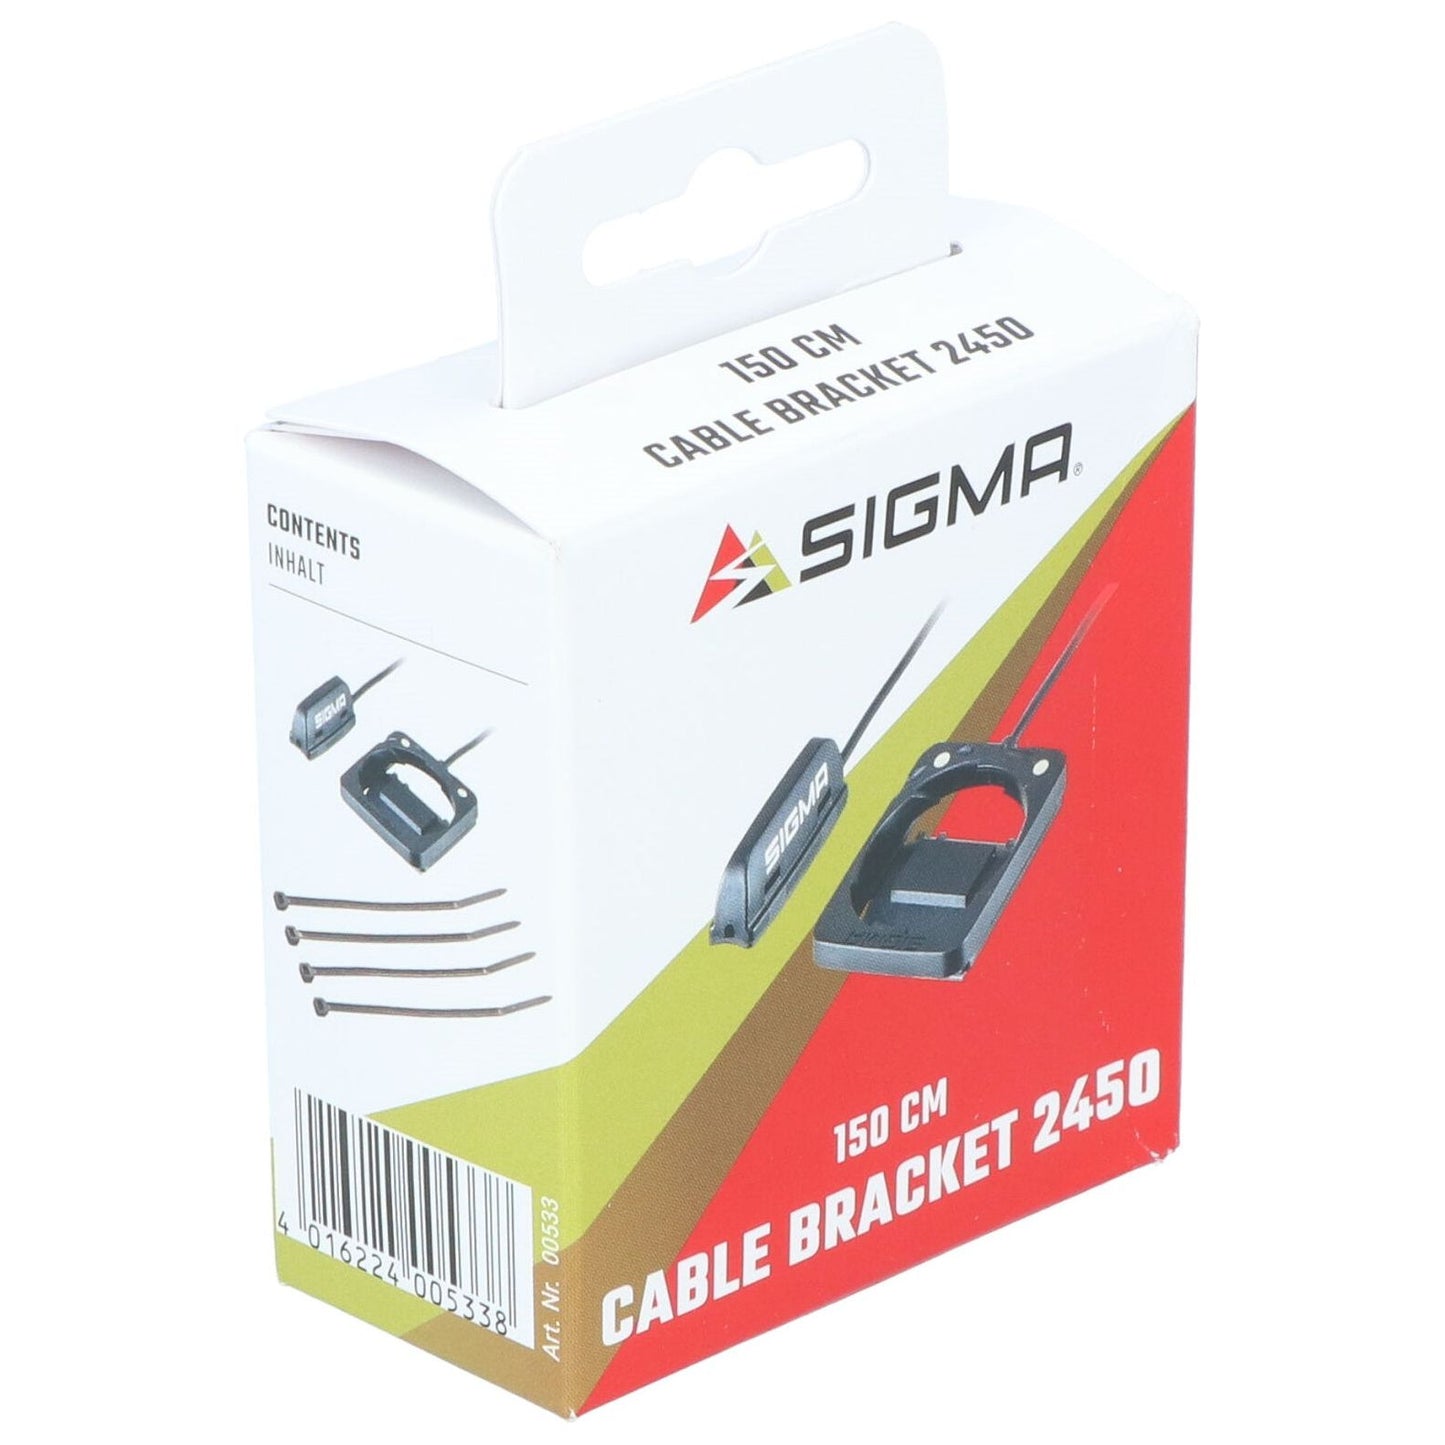 Sigma computerhouder met kabel 150 cm 2450 original serie 00533